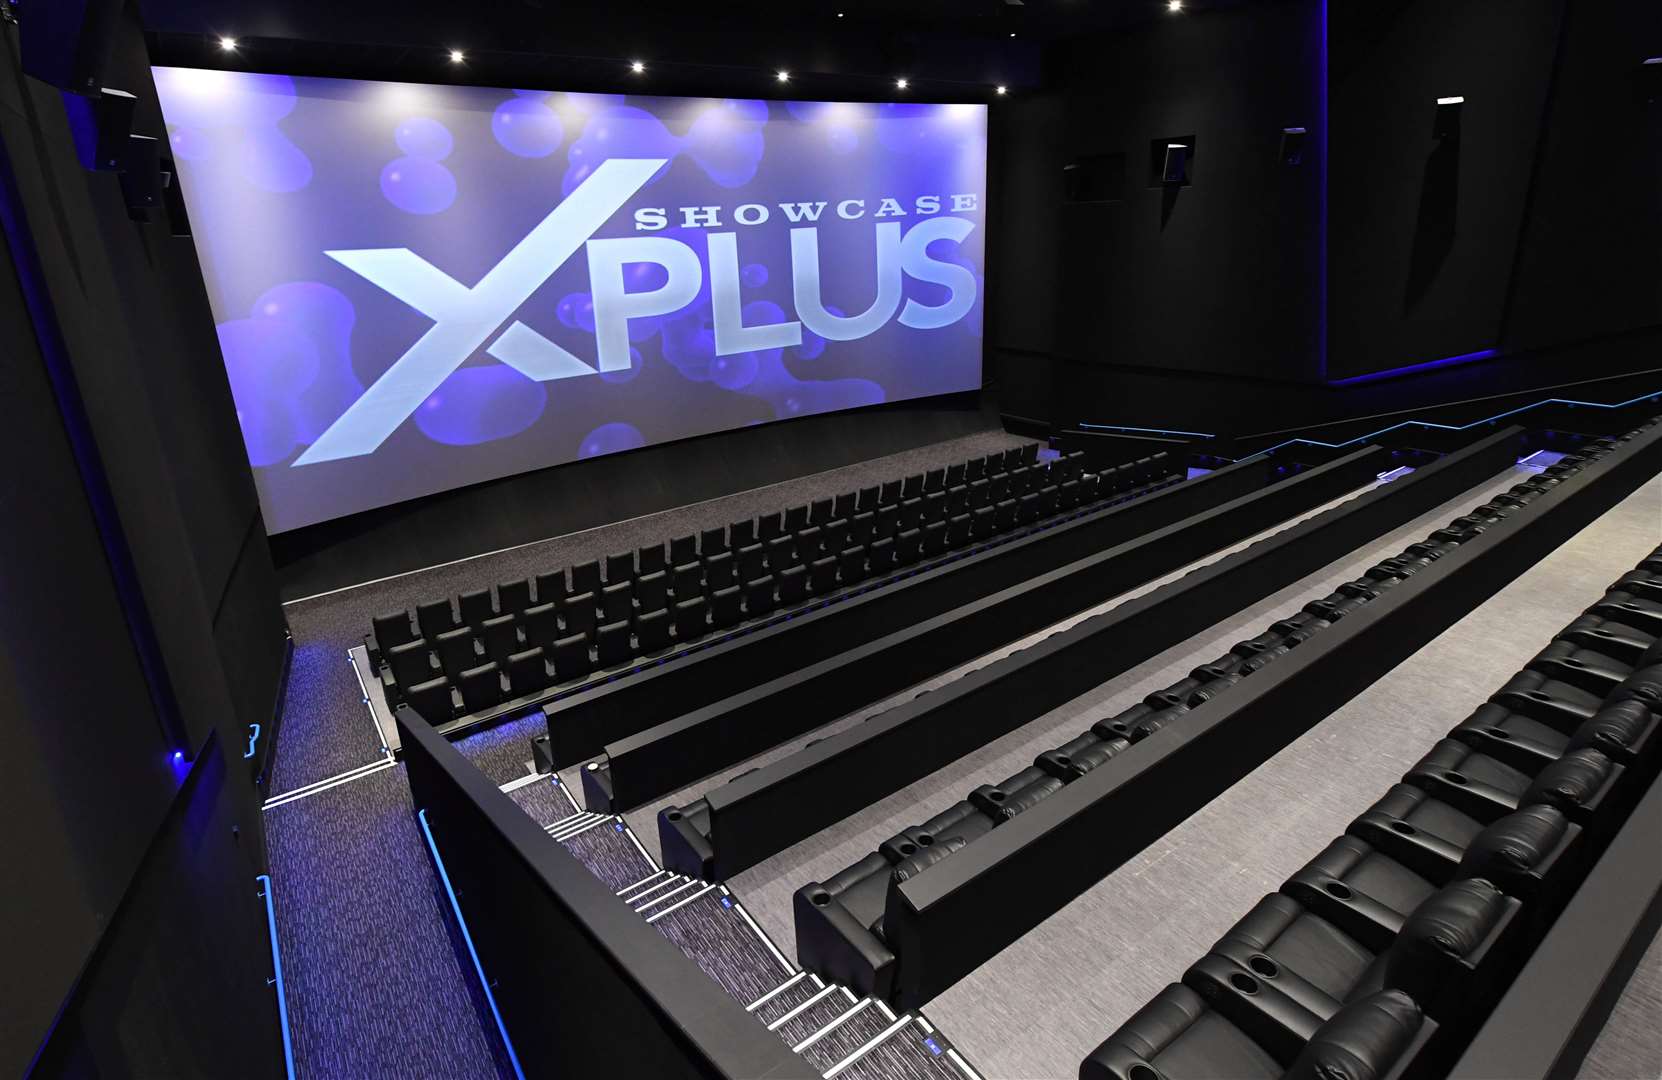 Showcase Cinema de Lux will reopen